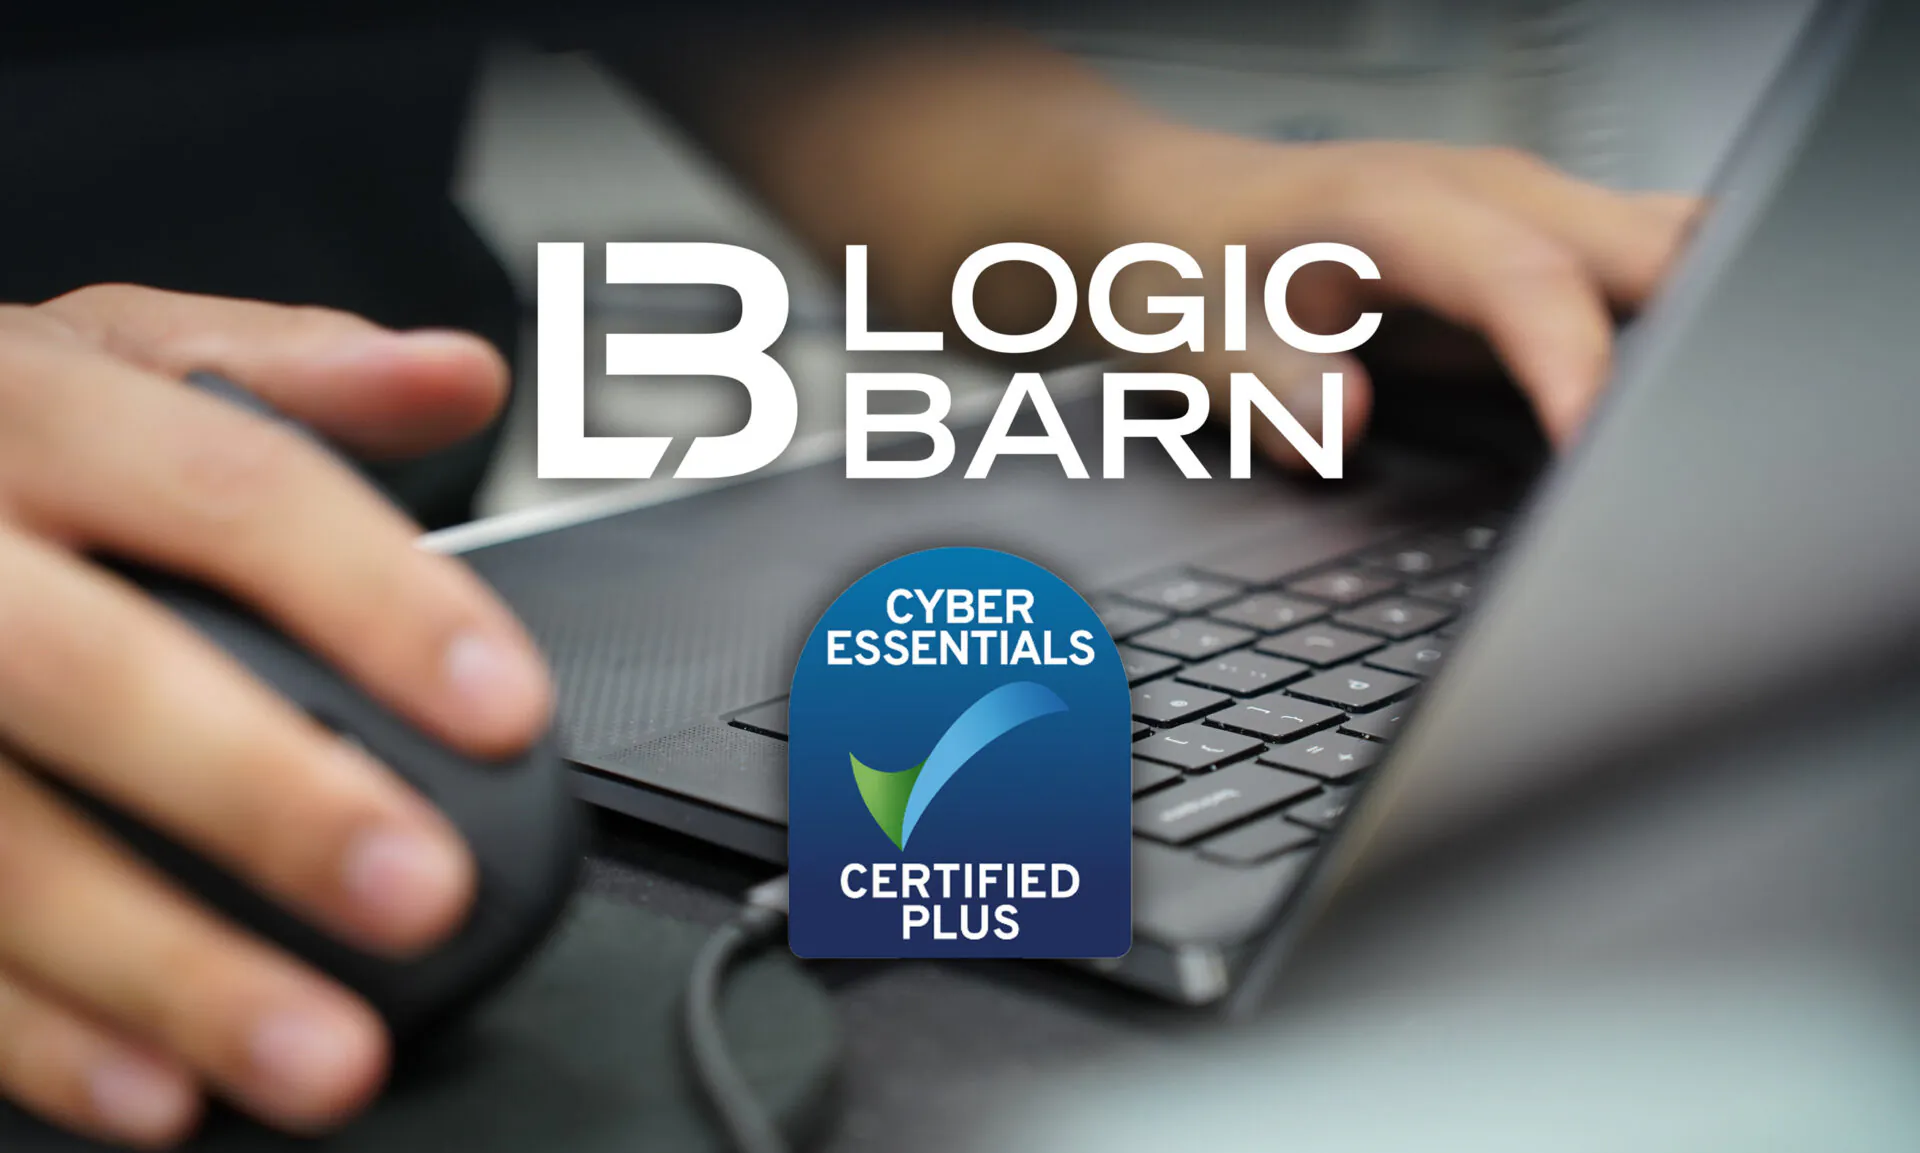 LB Cyber Essentials Certifies Plus